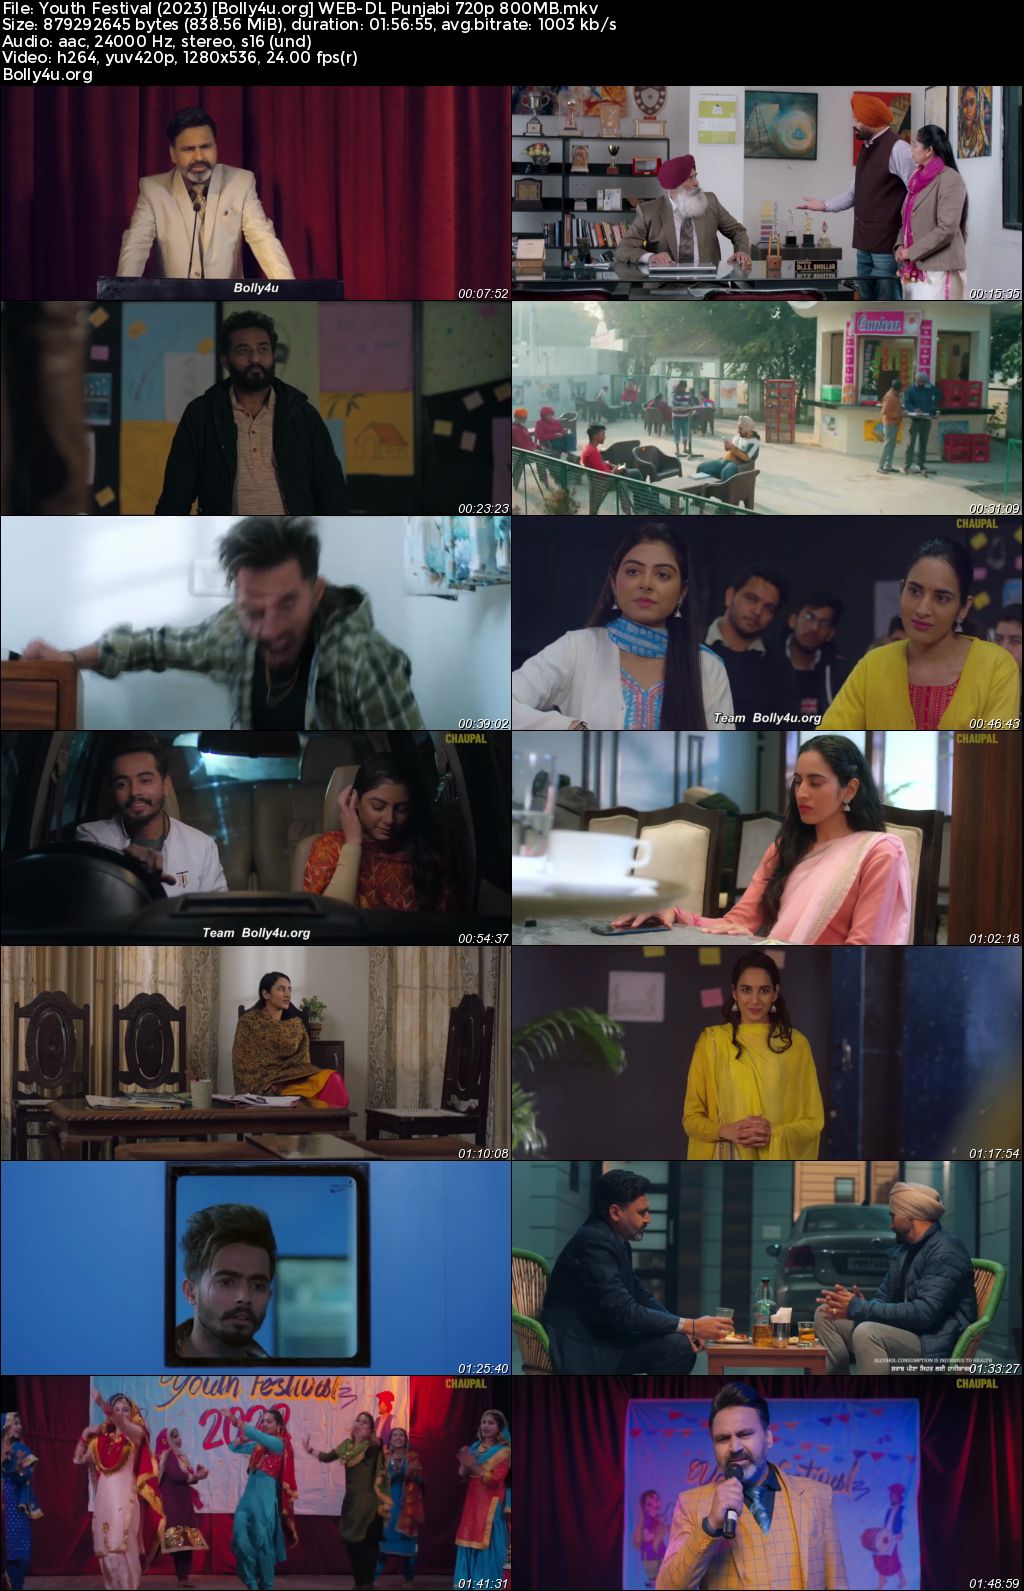 Youth Festival 2023 WEB-DL Punjabi Full Movie Download 1080p 720p 480p